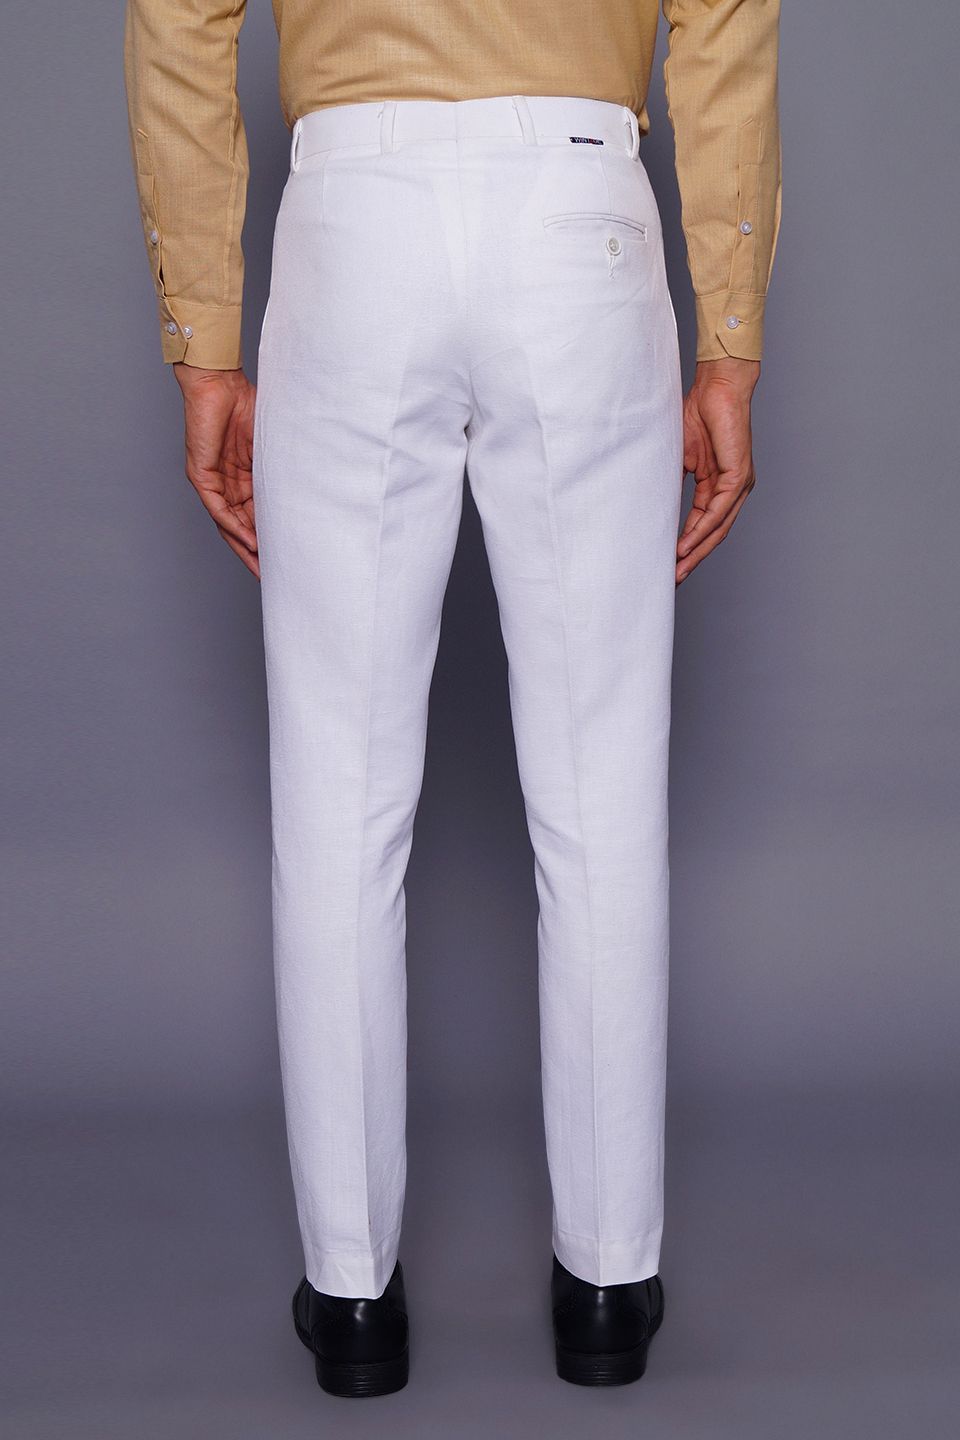 Wintage Men's Sky White Regular Fit Pant 100% Linen 